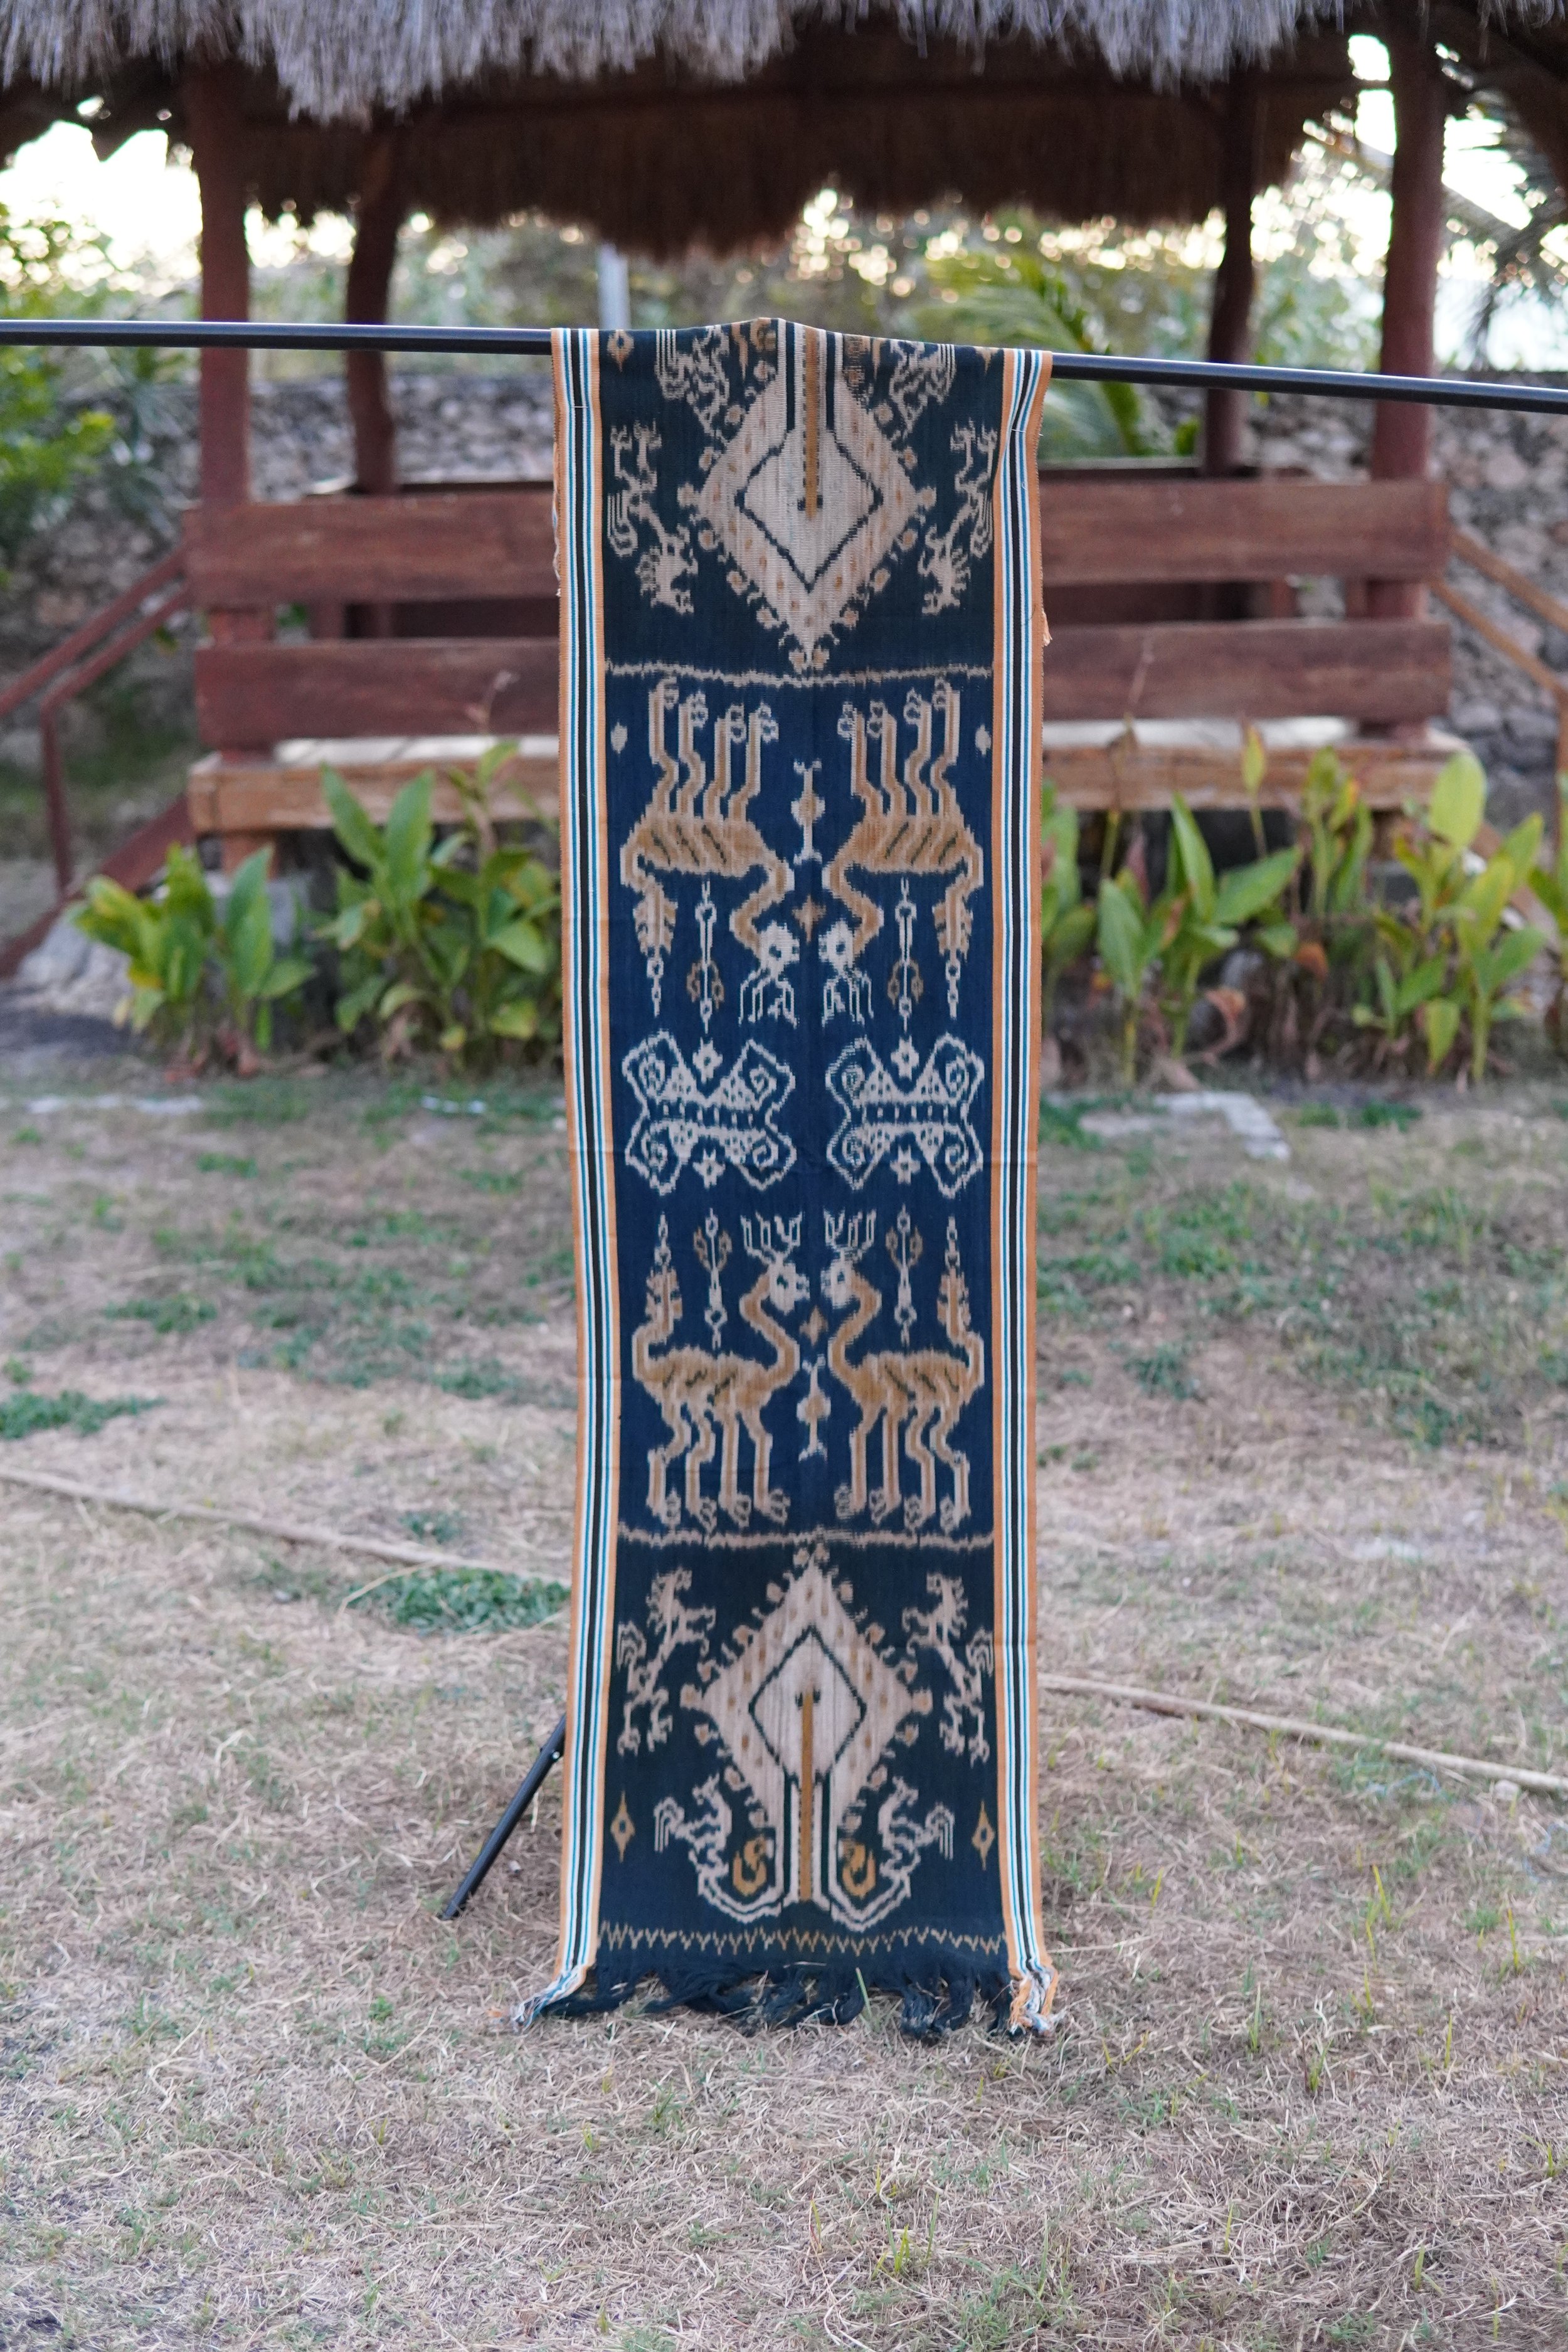  Mamuli Dangu Ruha   2022 cotton with natural indigo and iju wood dye 169 x 43 cm  